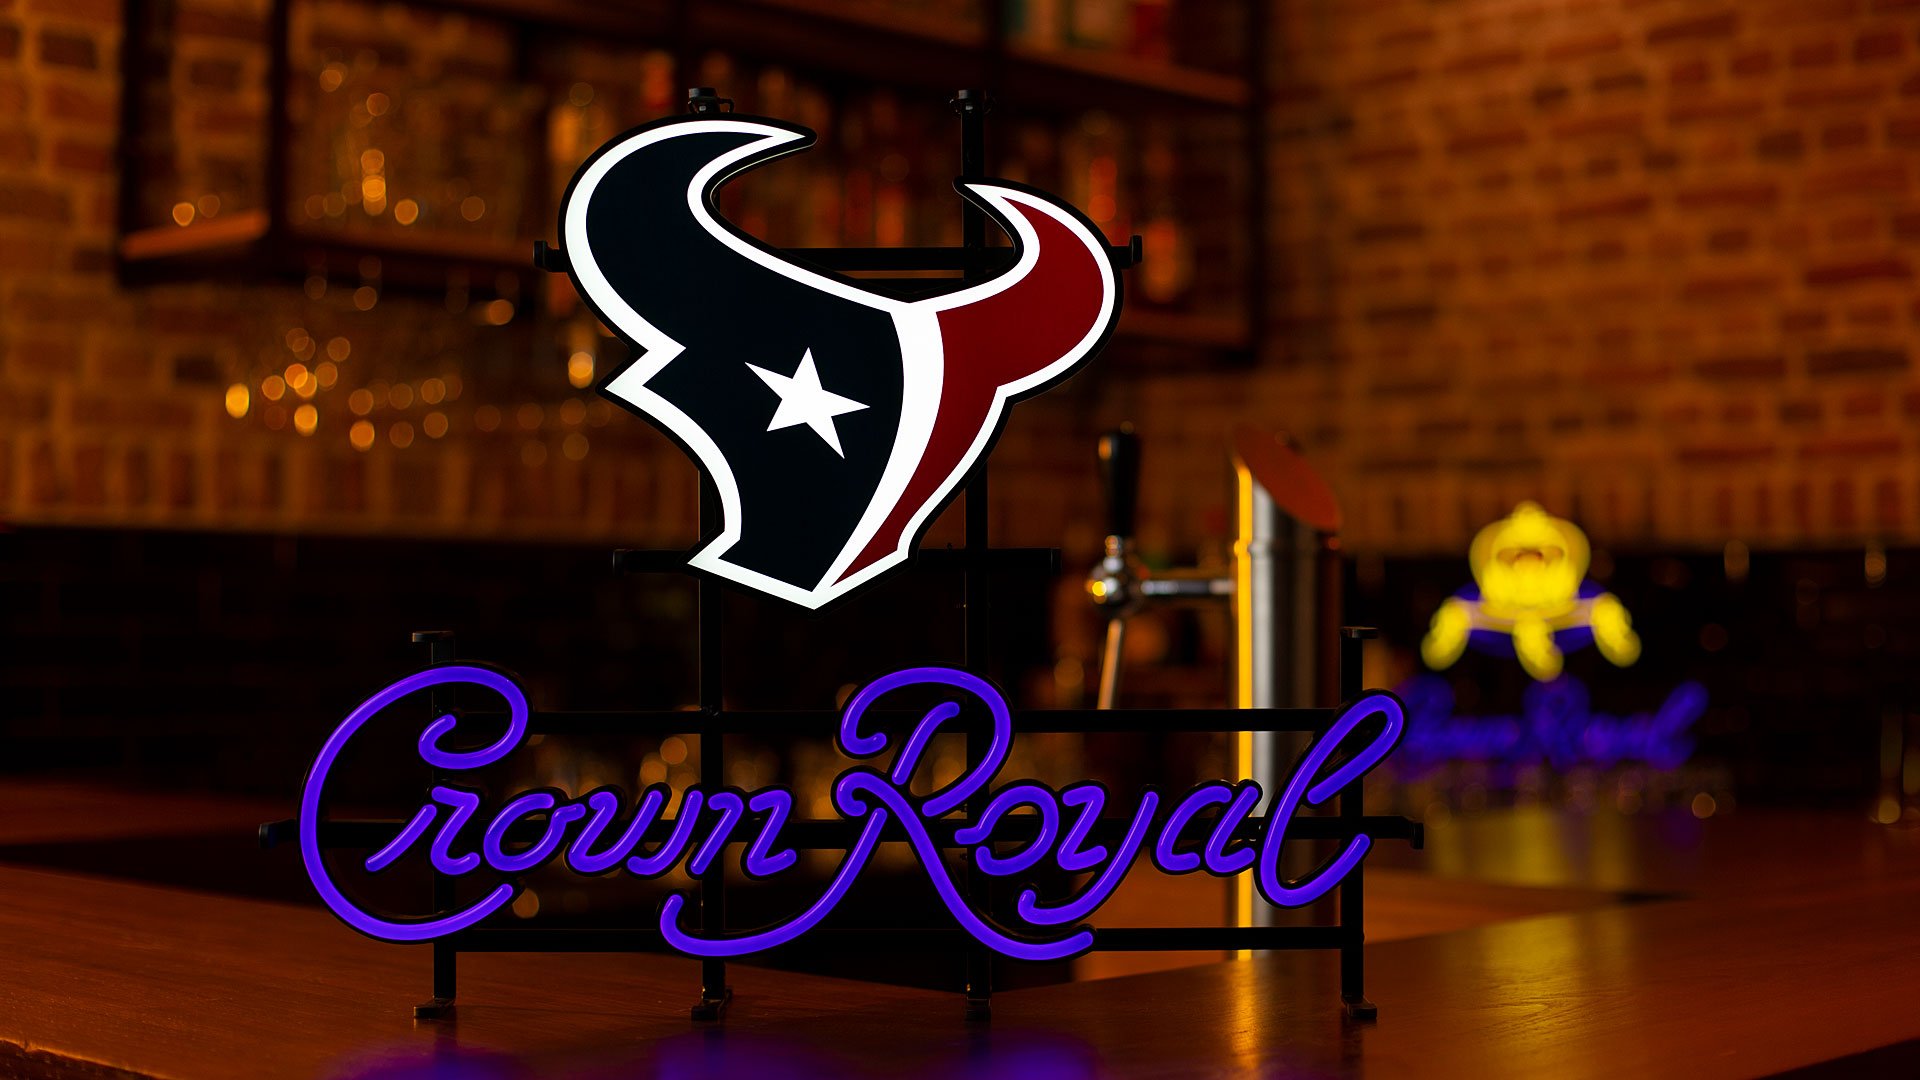 Crown-Royal-Texans, 2019-021 - 1920x1080 px - Lage resolutie (1)